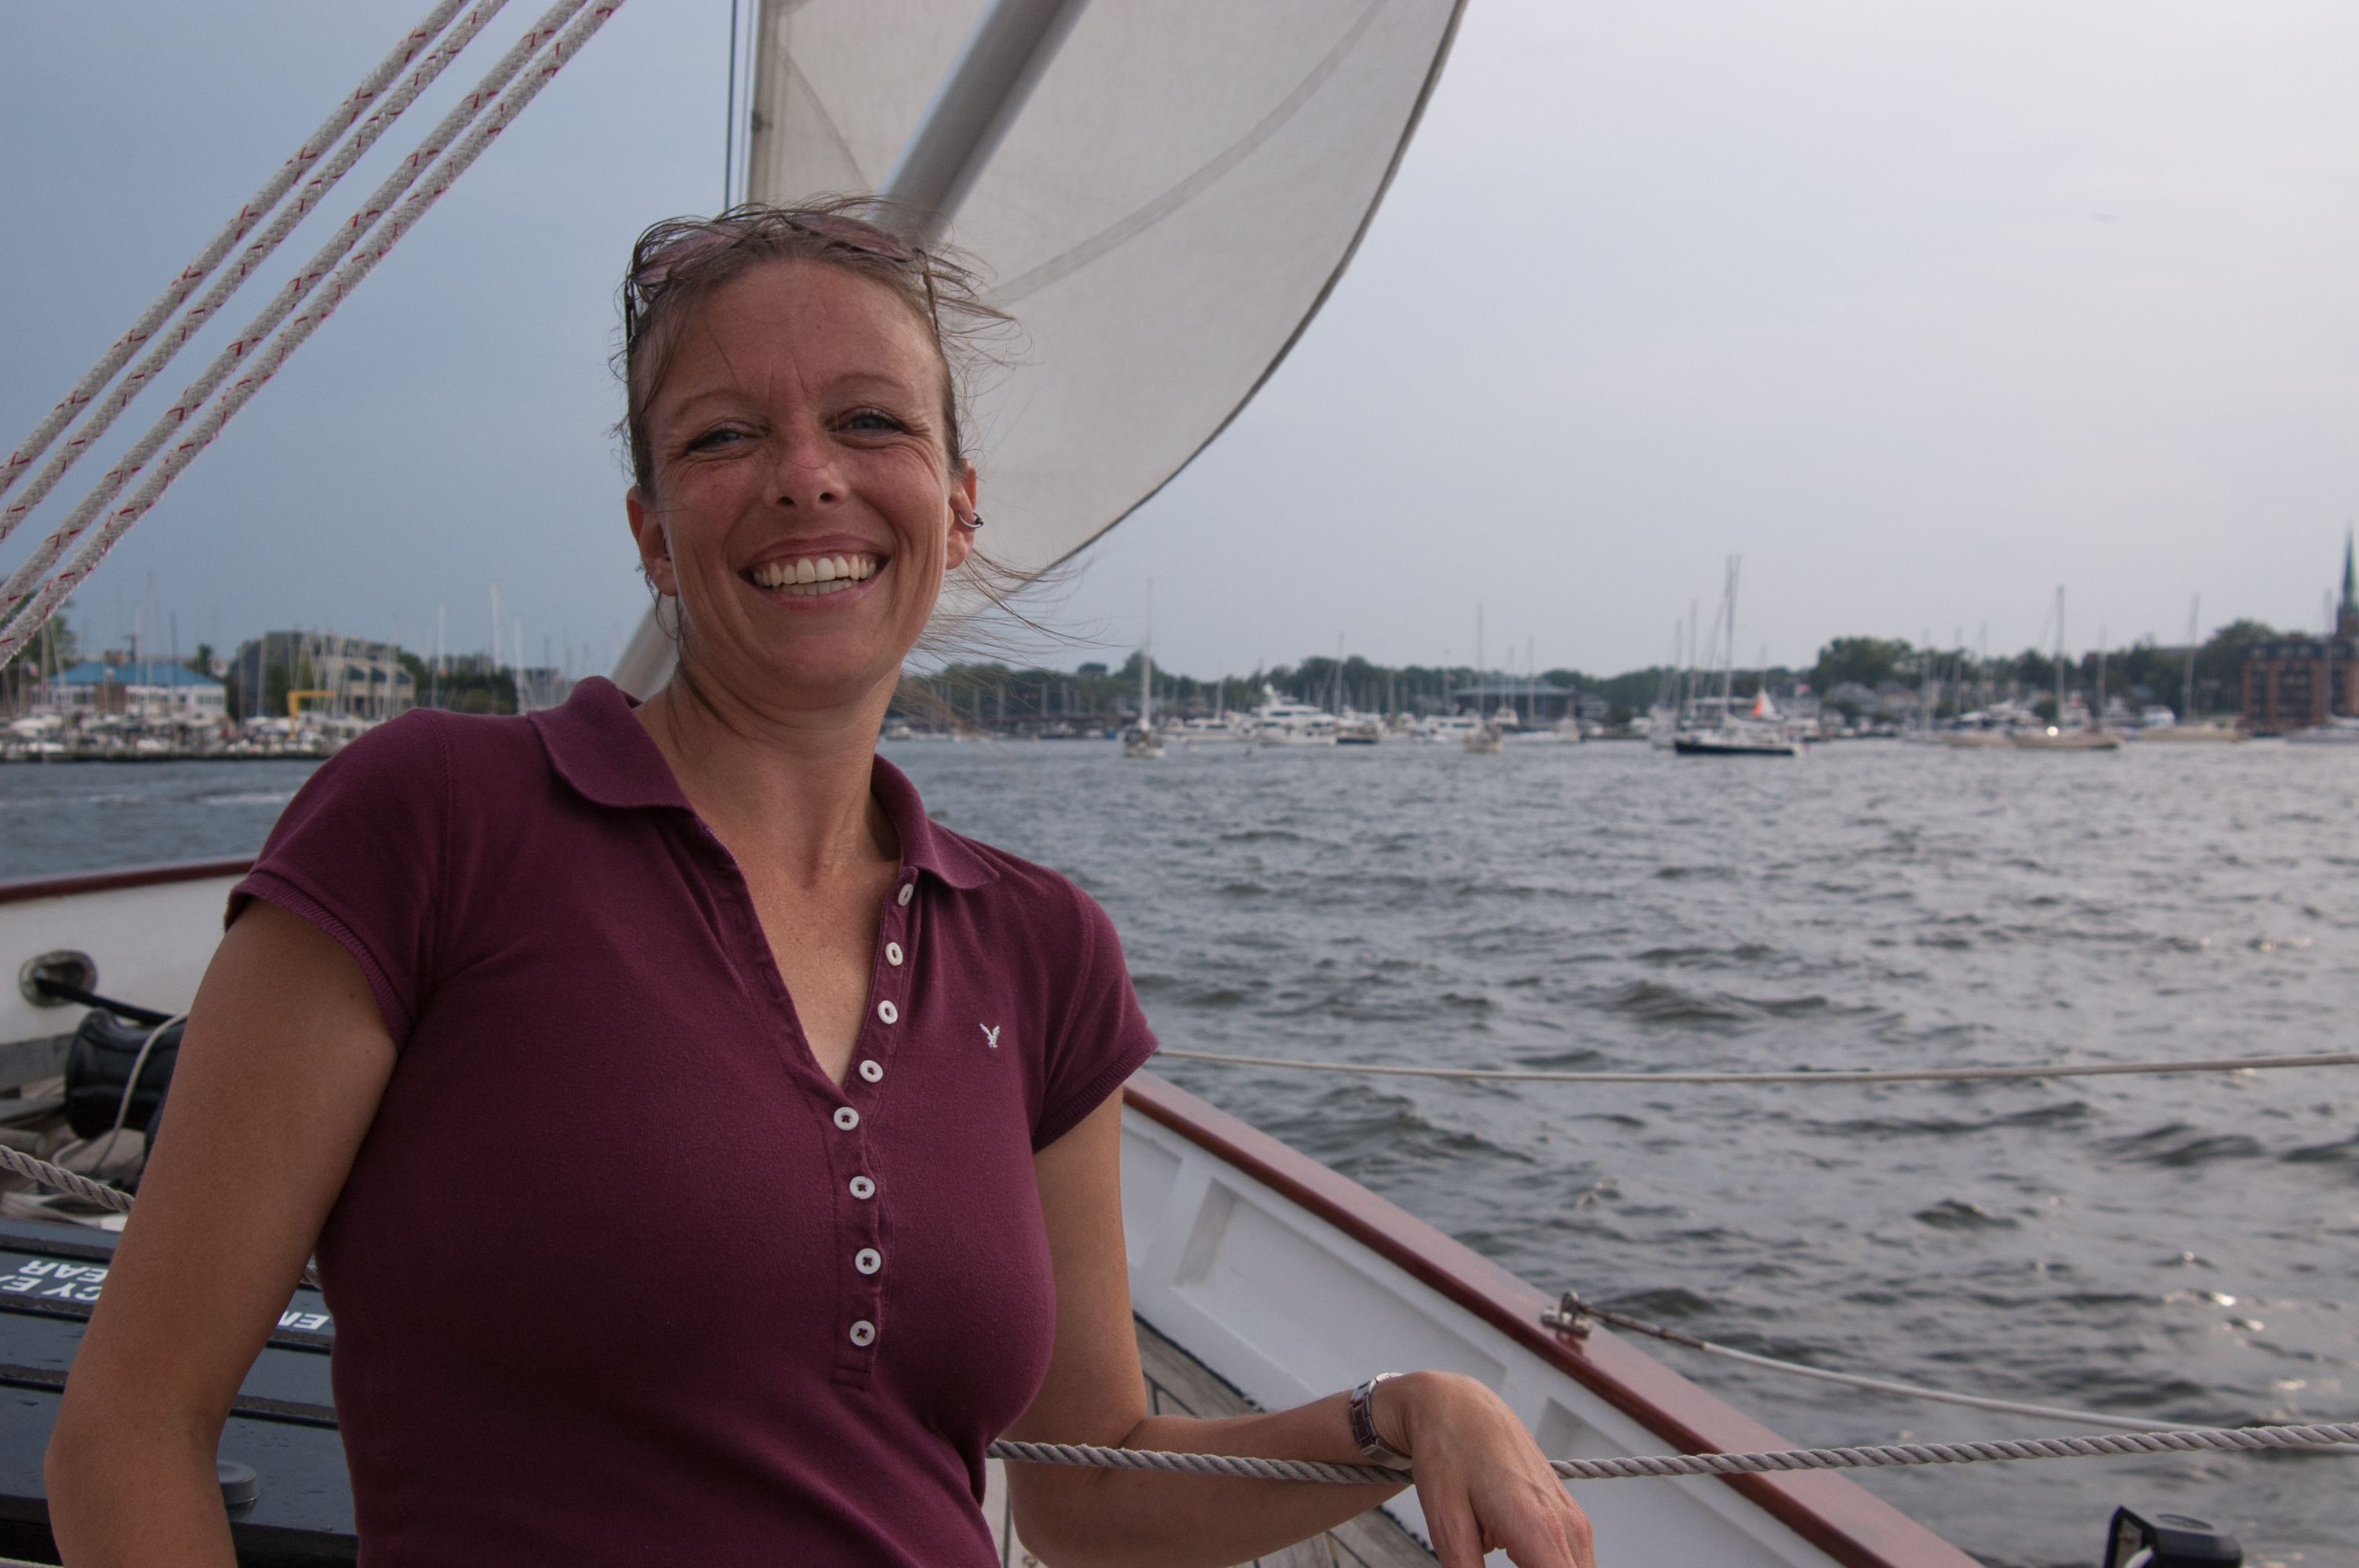 Sara sailing on the schooner